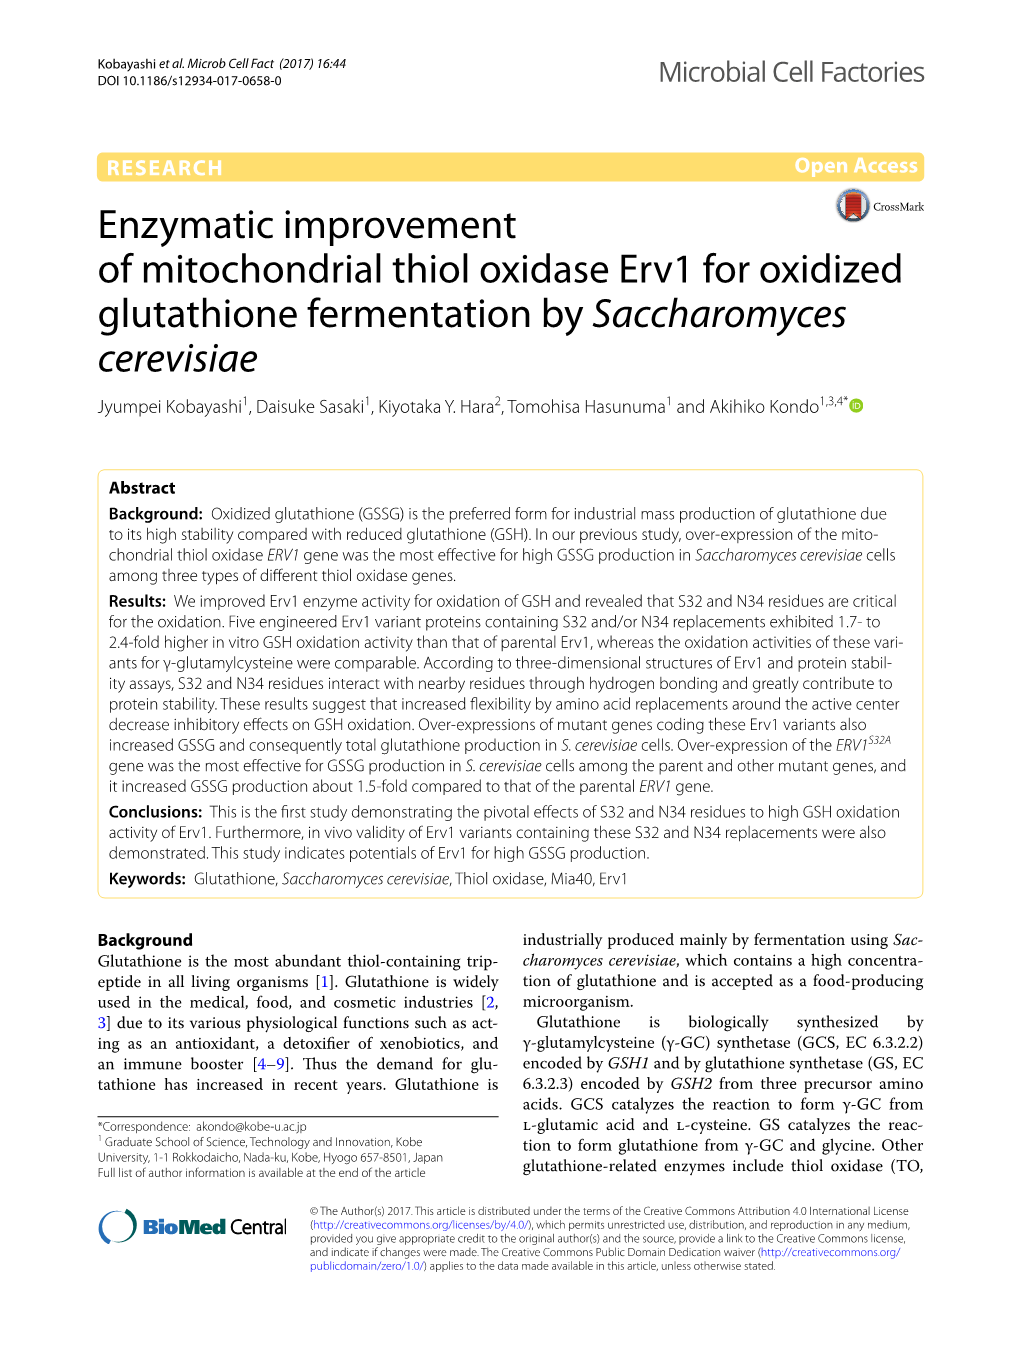 Enzymatic Improvement of Mitochondrial Thiol Oxidase Erv1 For